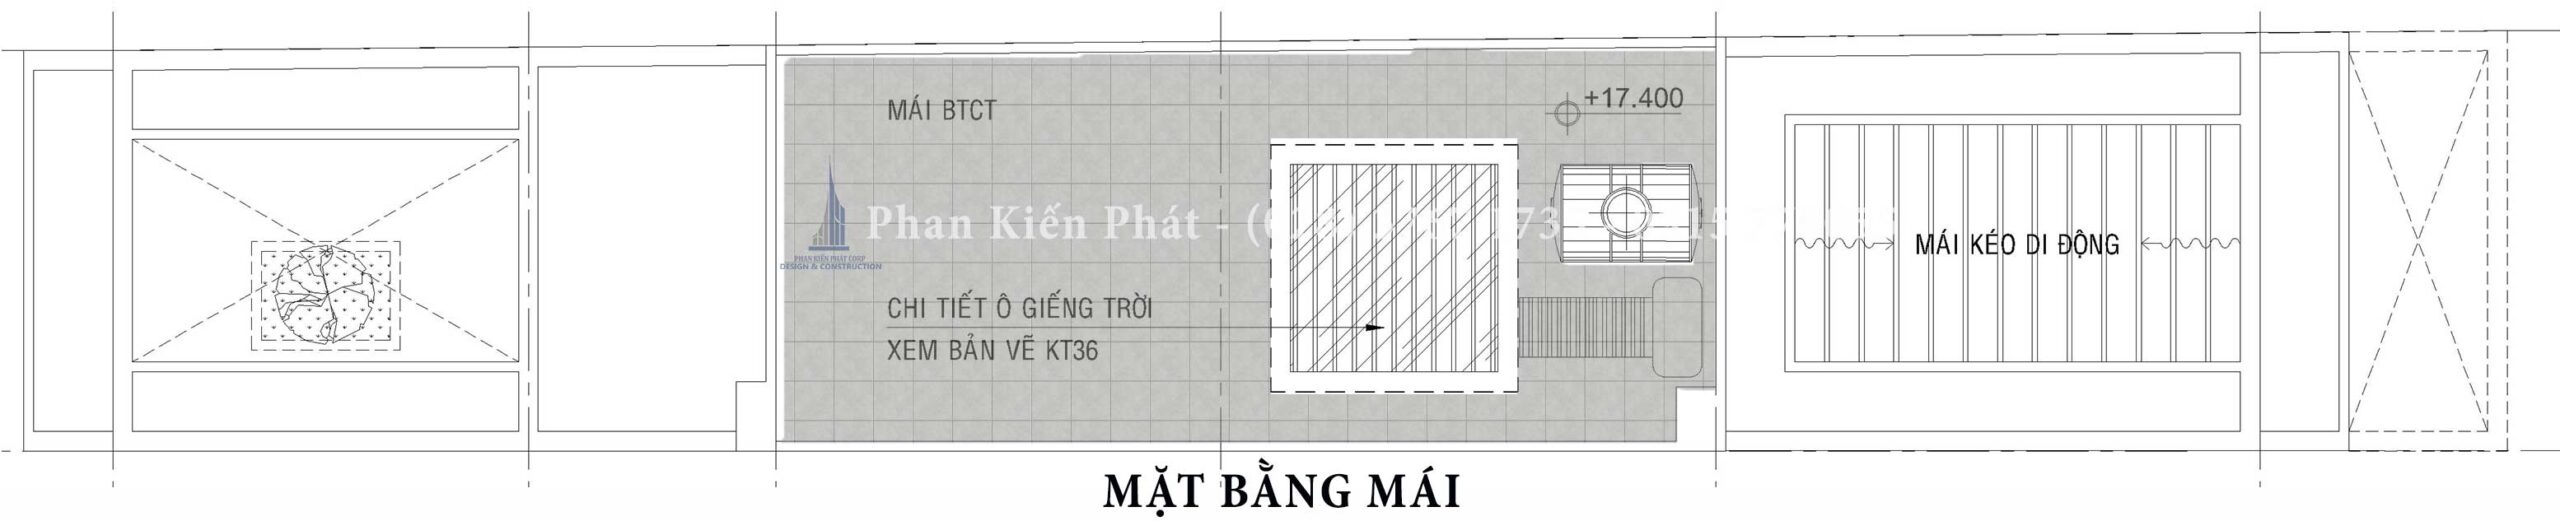 Mat Bang Mai Nha Pho 4 Lau Ket Hop Phong Kham